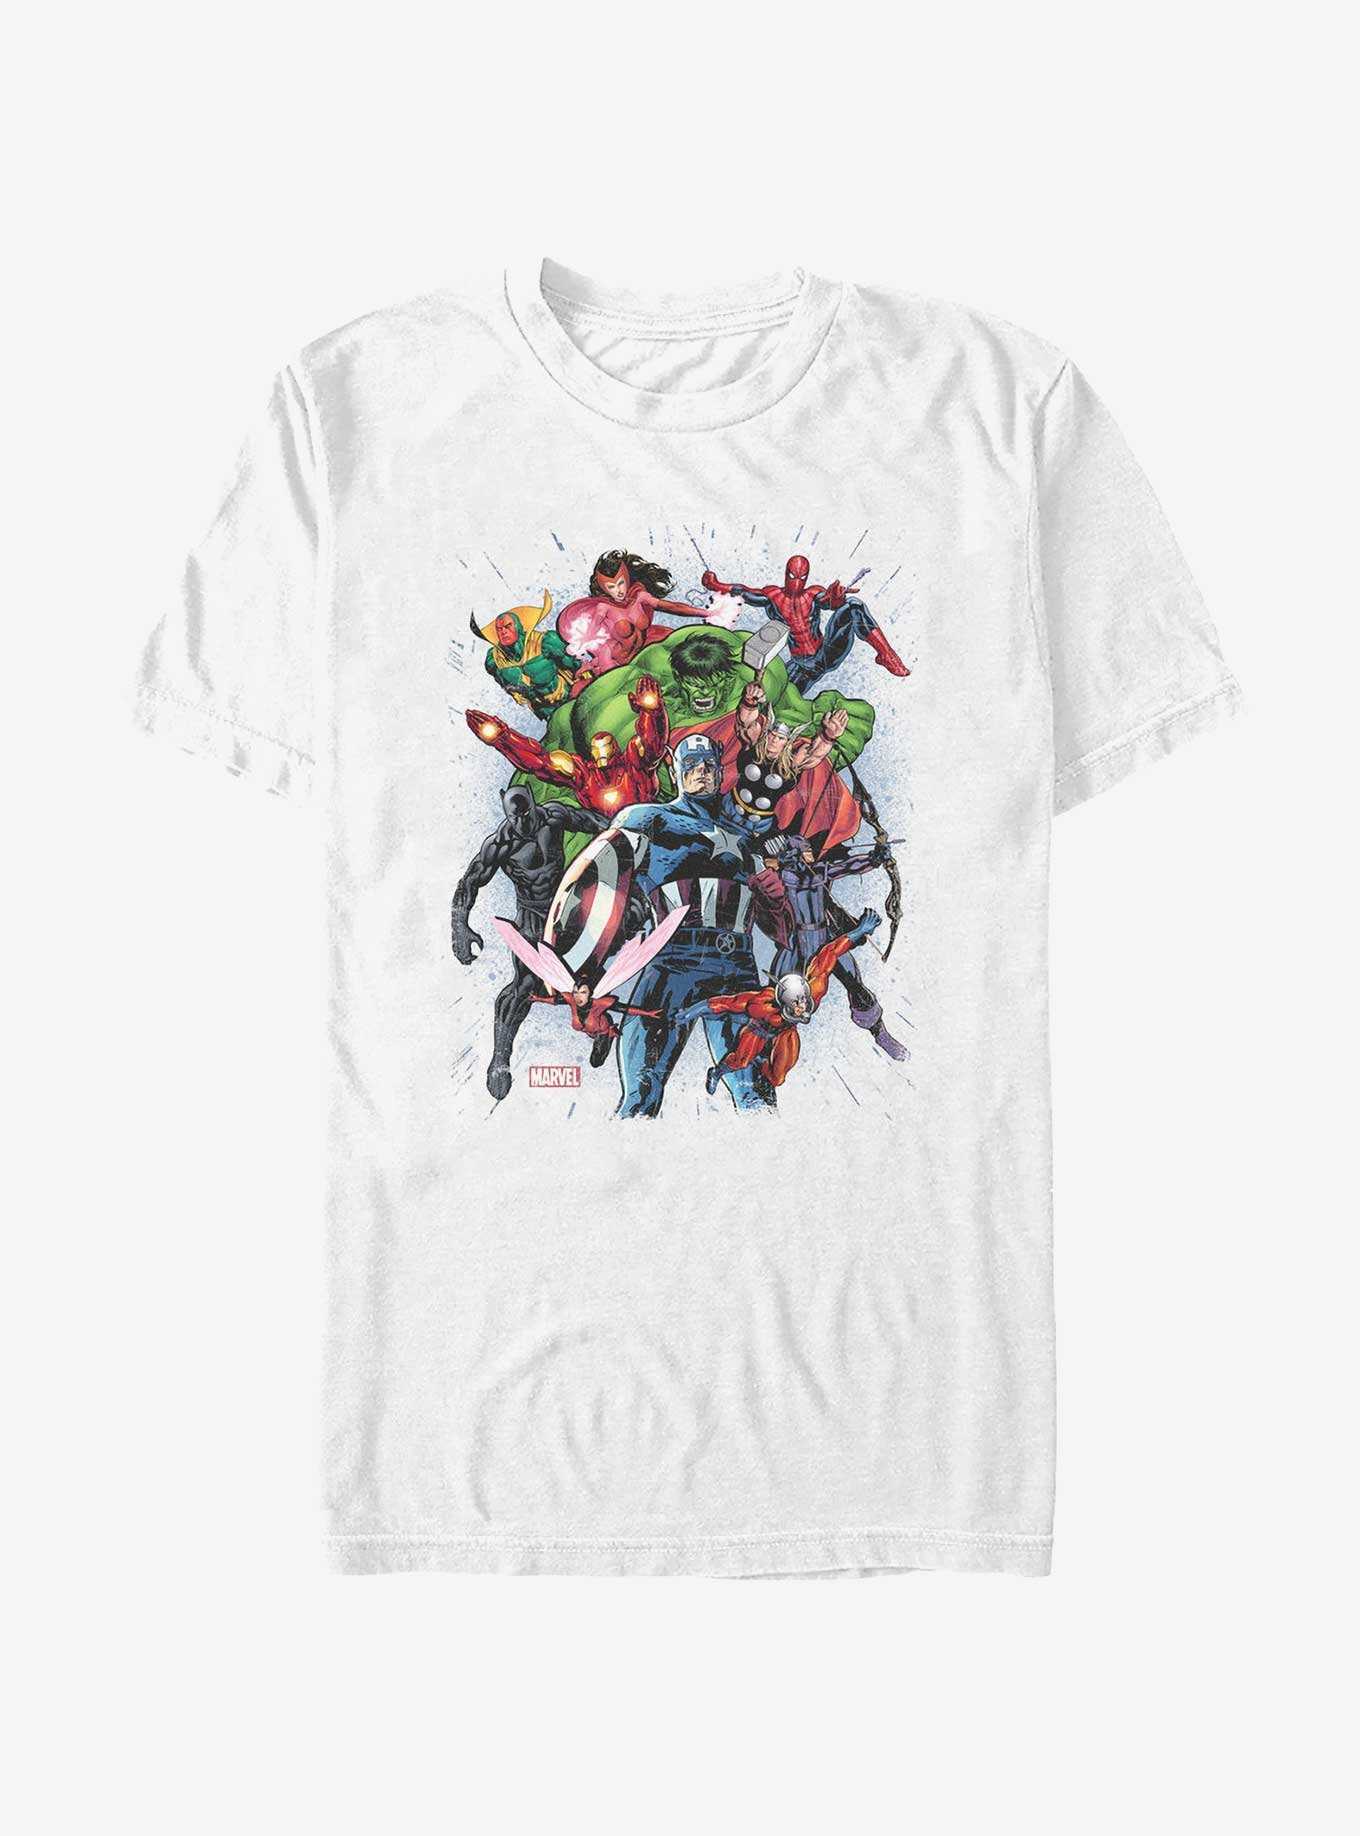 Marvel Avengers Classic Team Burst T-Shirt, , hi-res